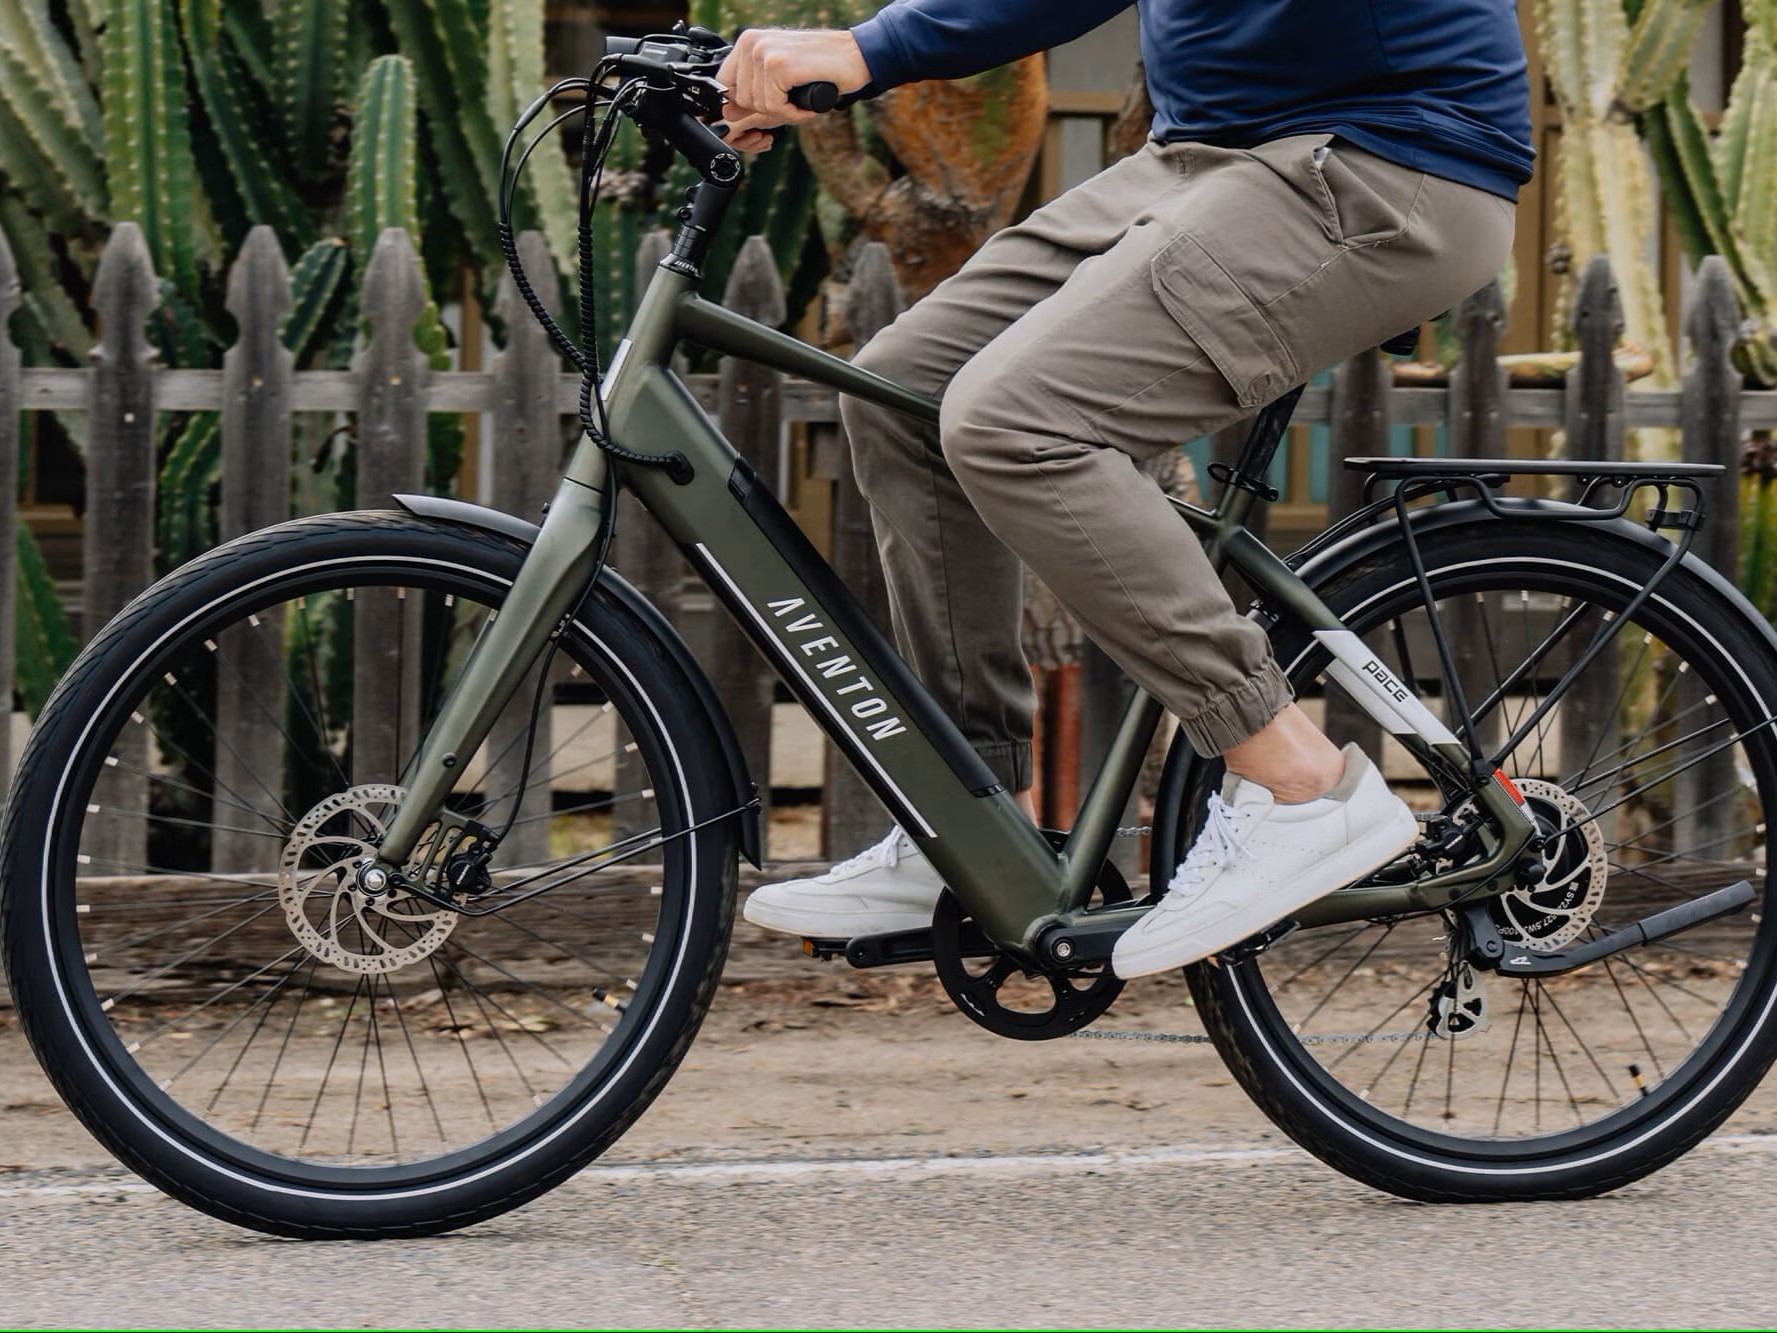 2019 Bike Lover Pose, Bike & Scooty Pose, How To Pose a Bike